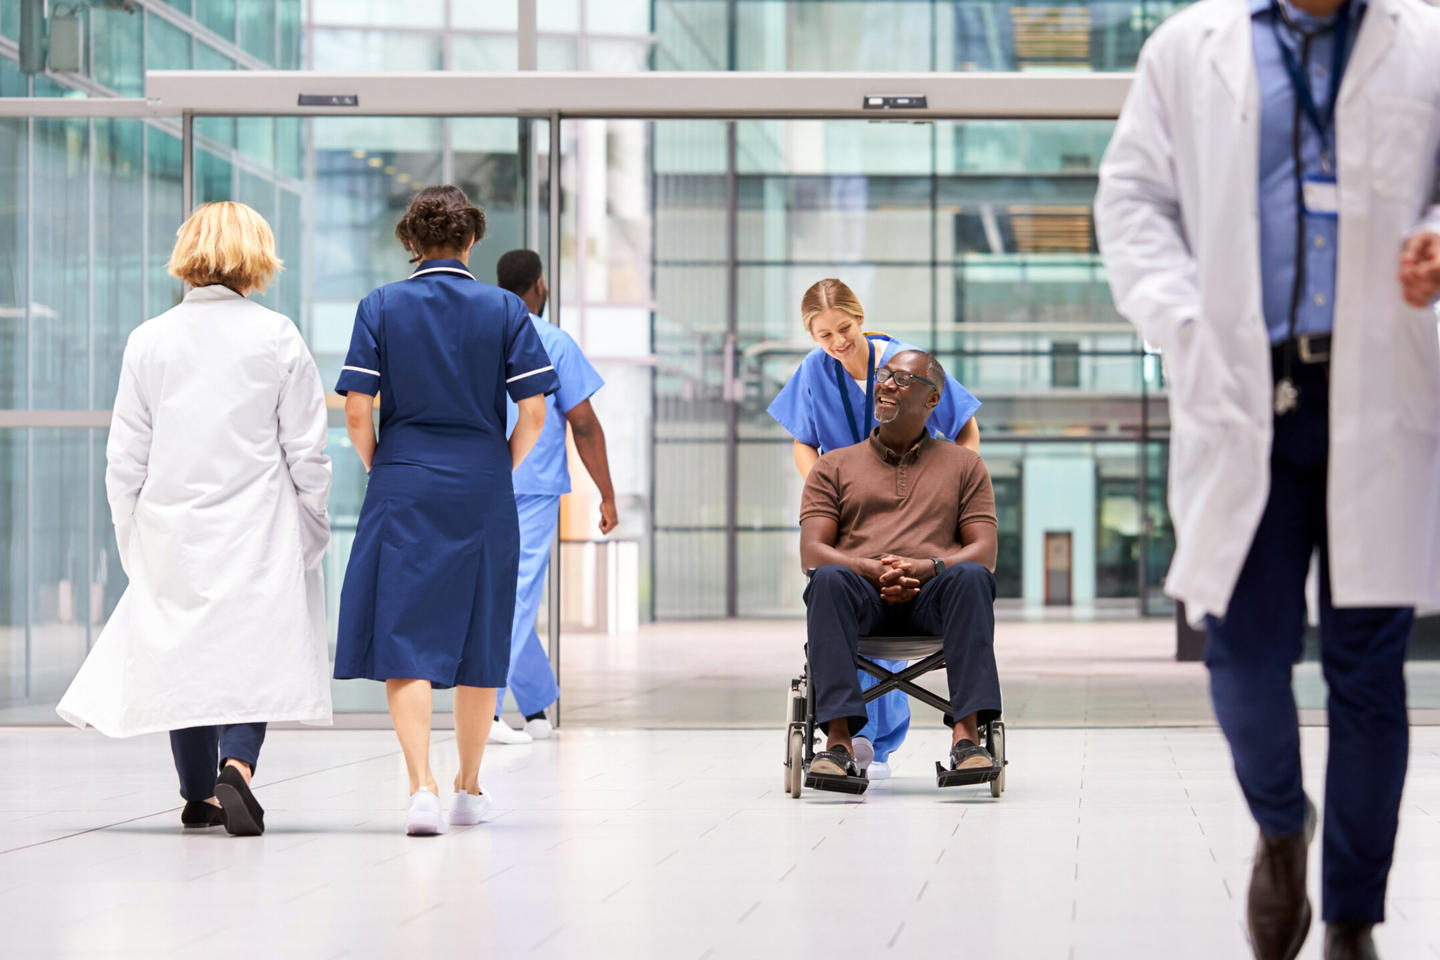 A nurse pushes a man in a wheel chair in a hospital